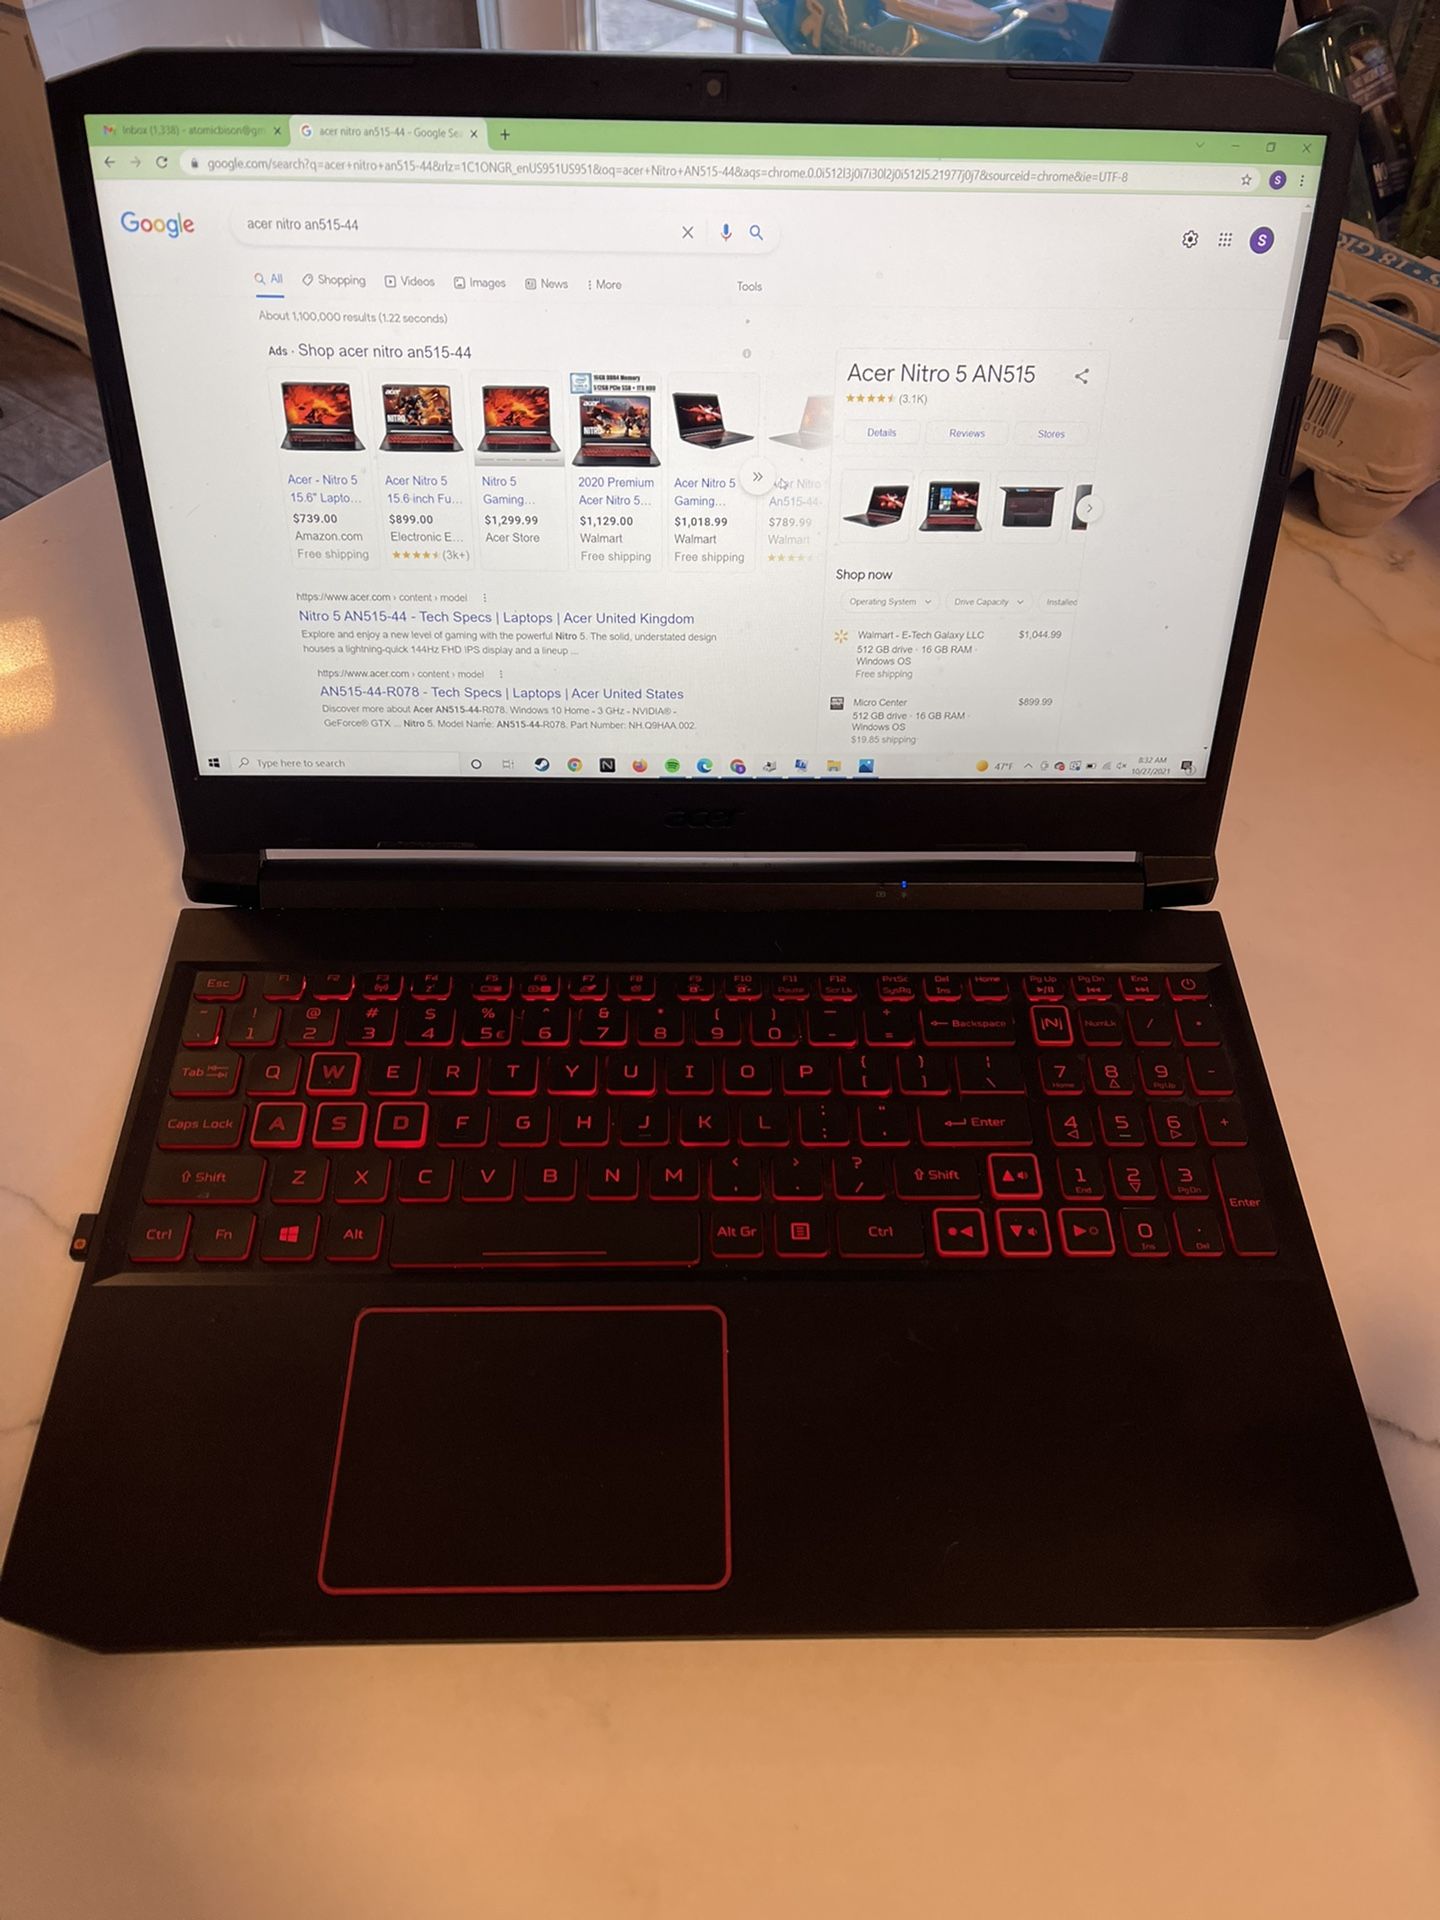 Acer Nitro 5 AN515-44 gaming laptop with 1 tb external storage